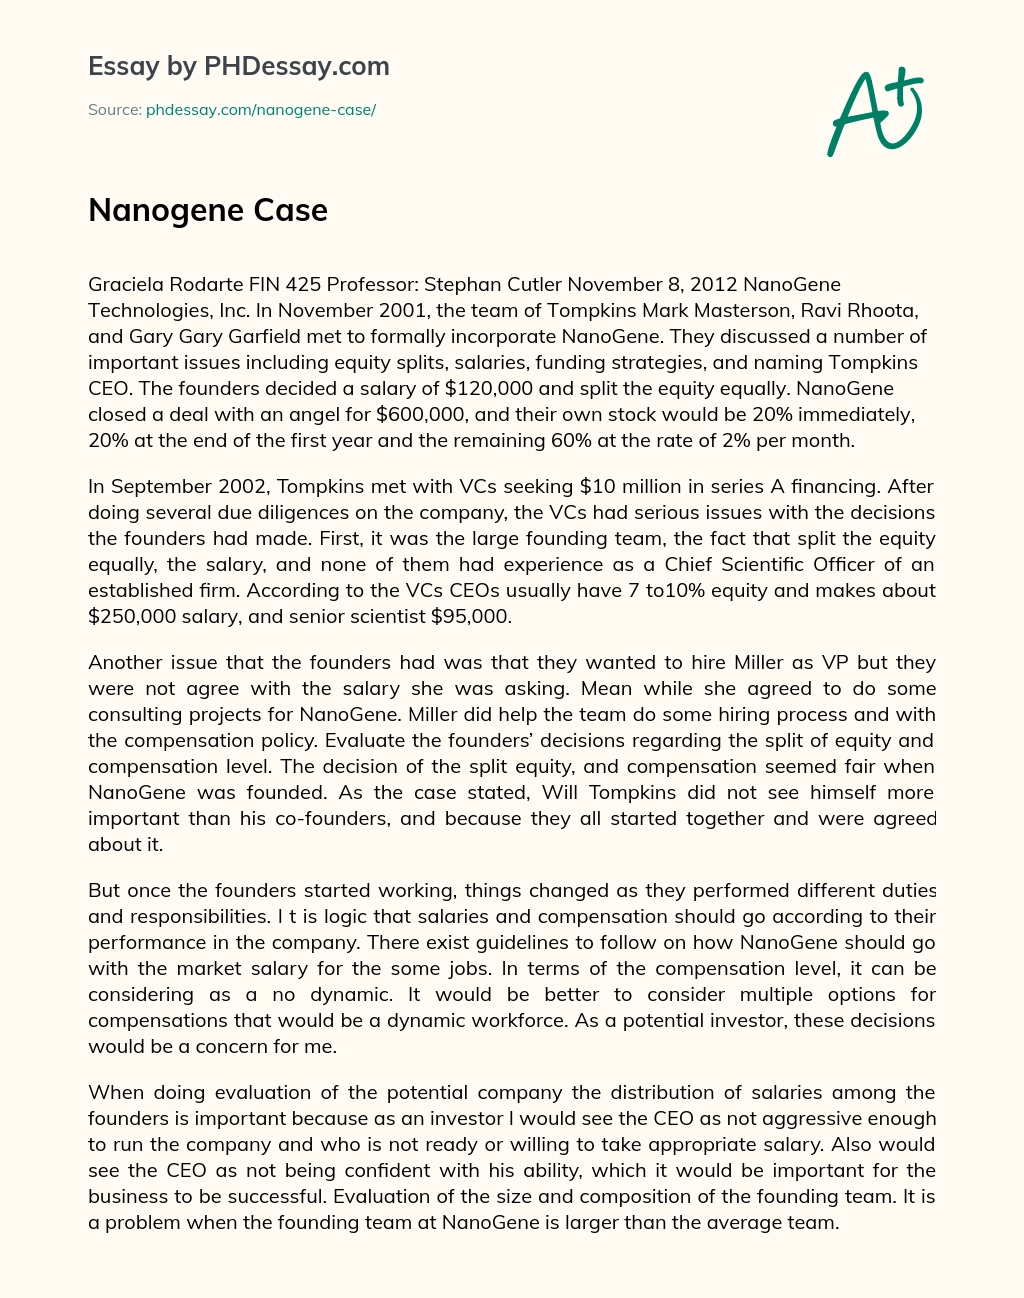 Nanogene Case essay